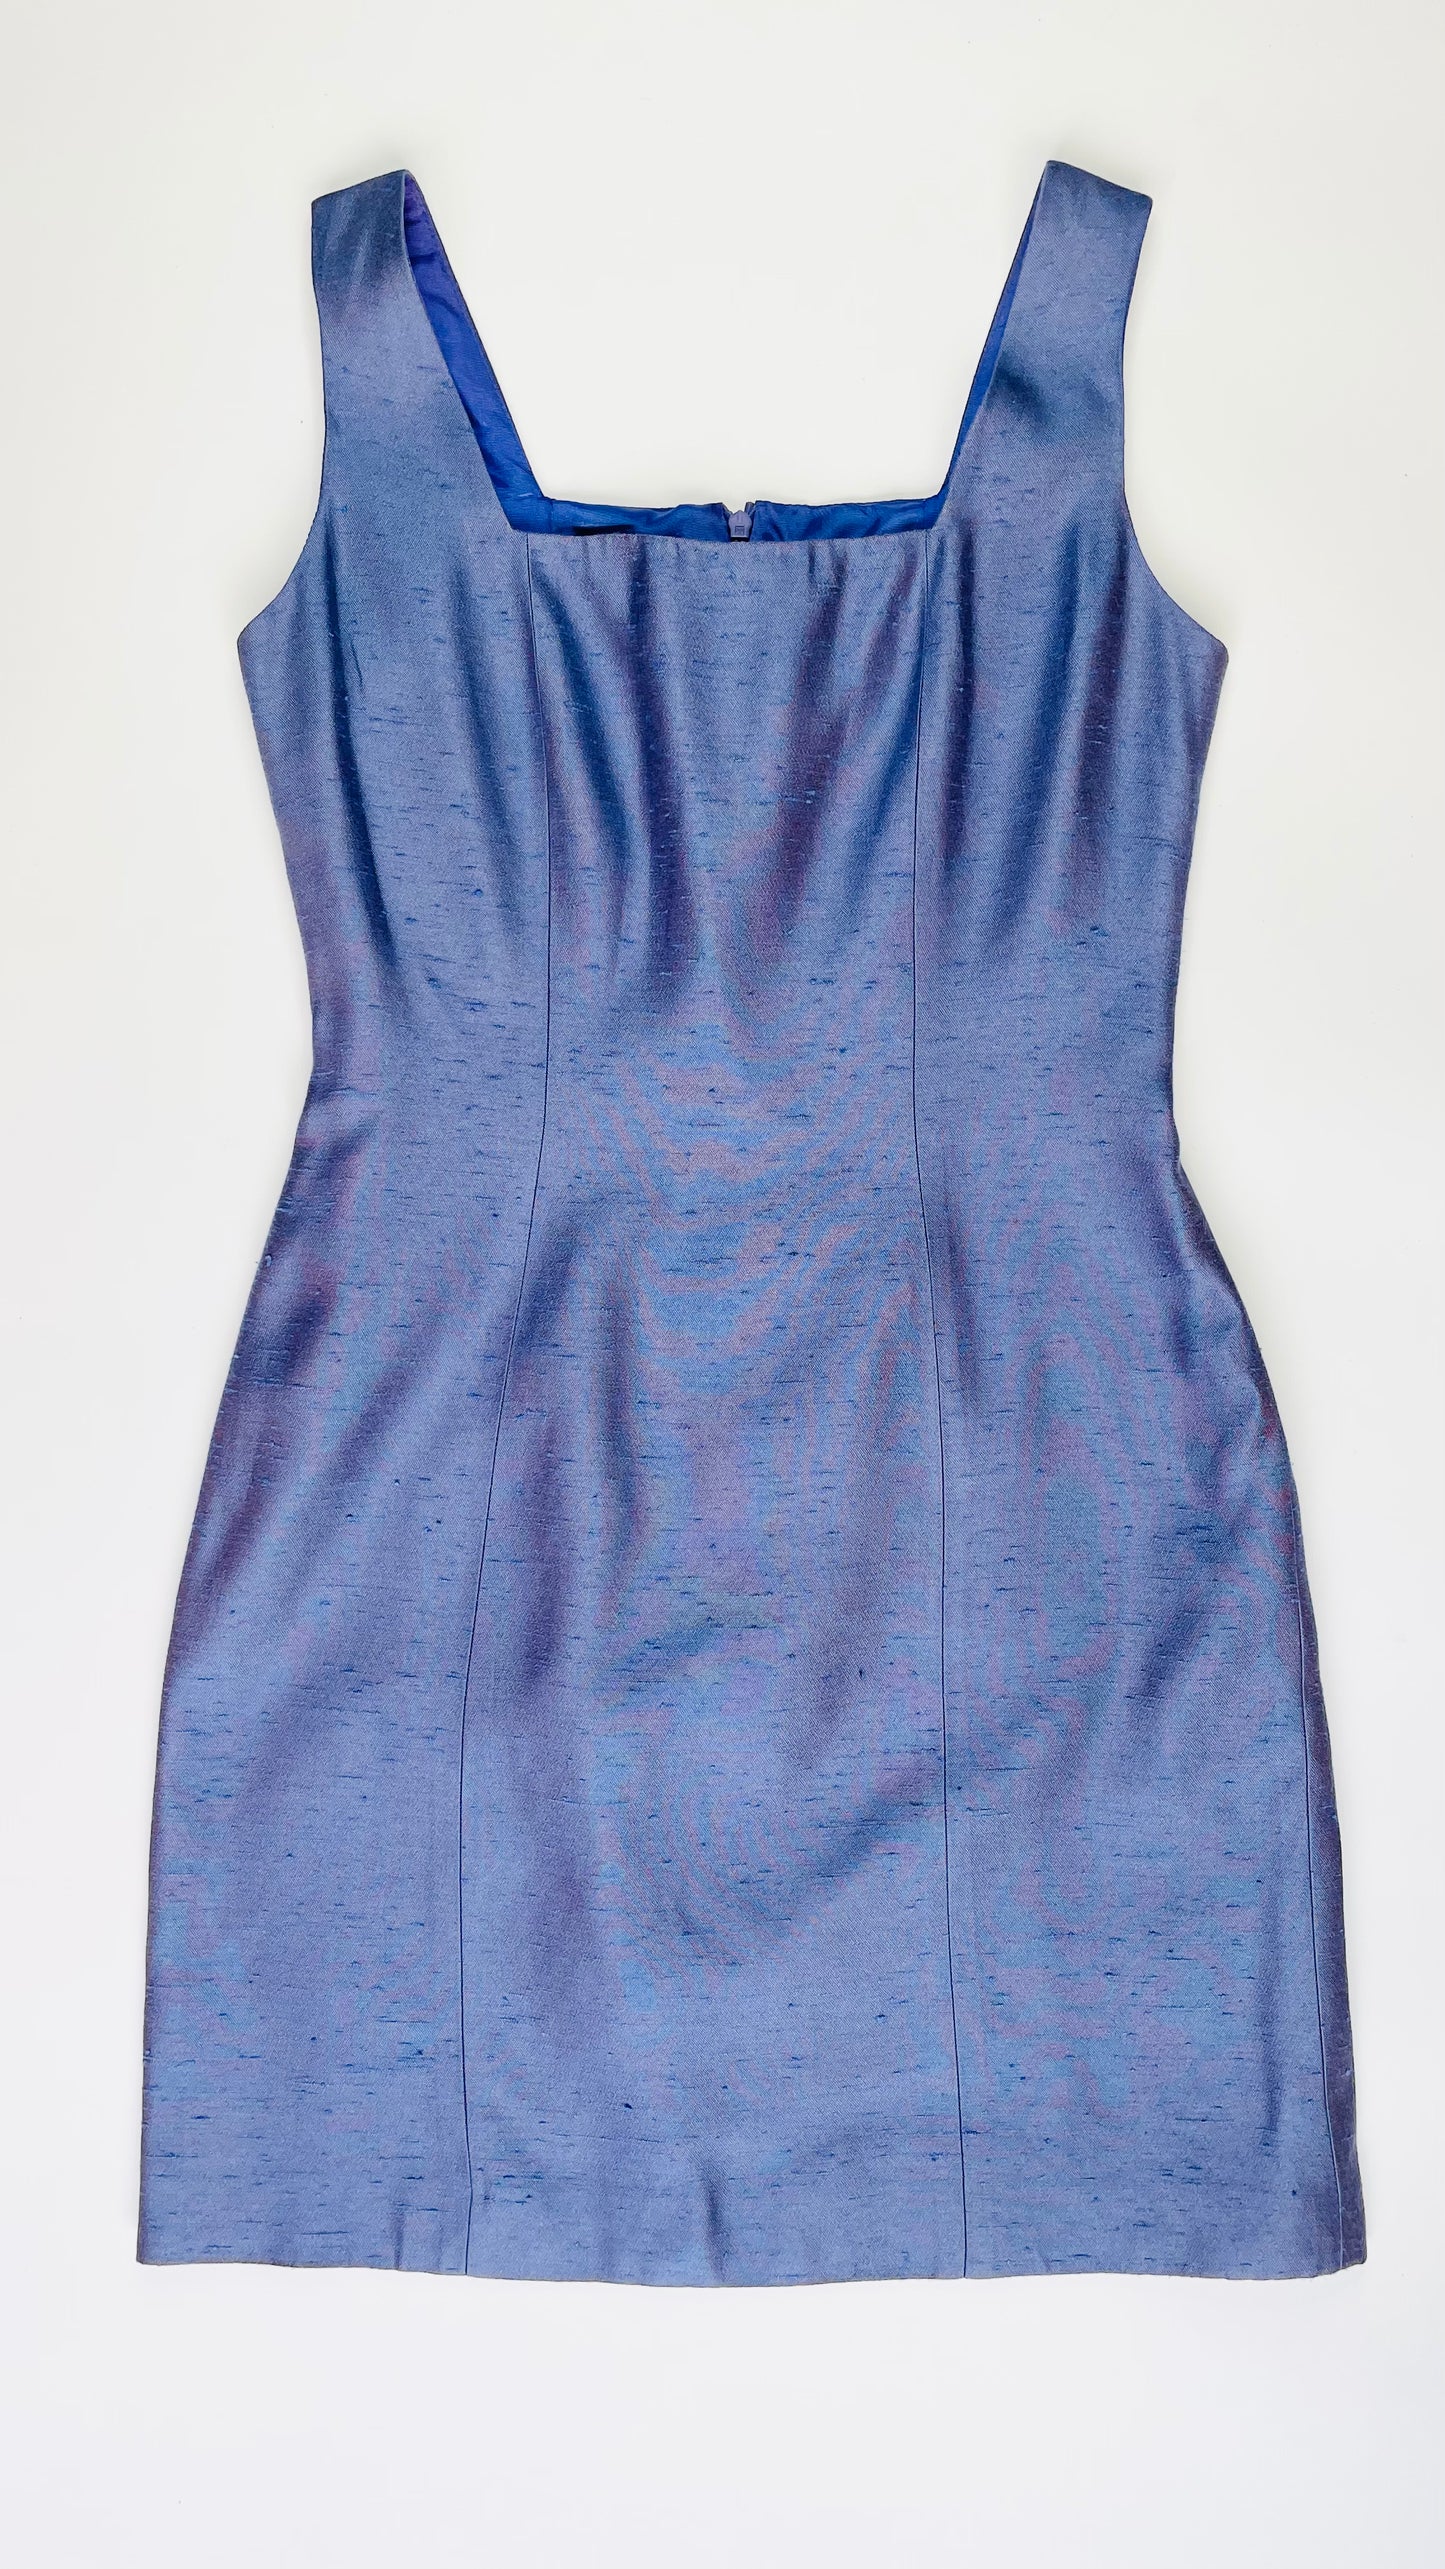 Vintage 90s periwinkle blue mini tank dress - Size 4